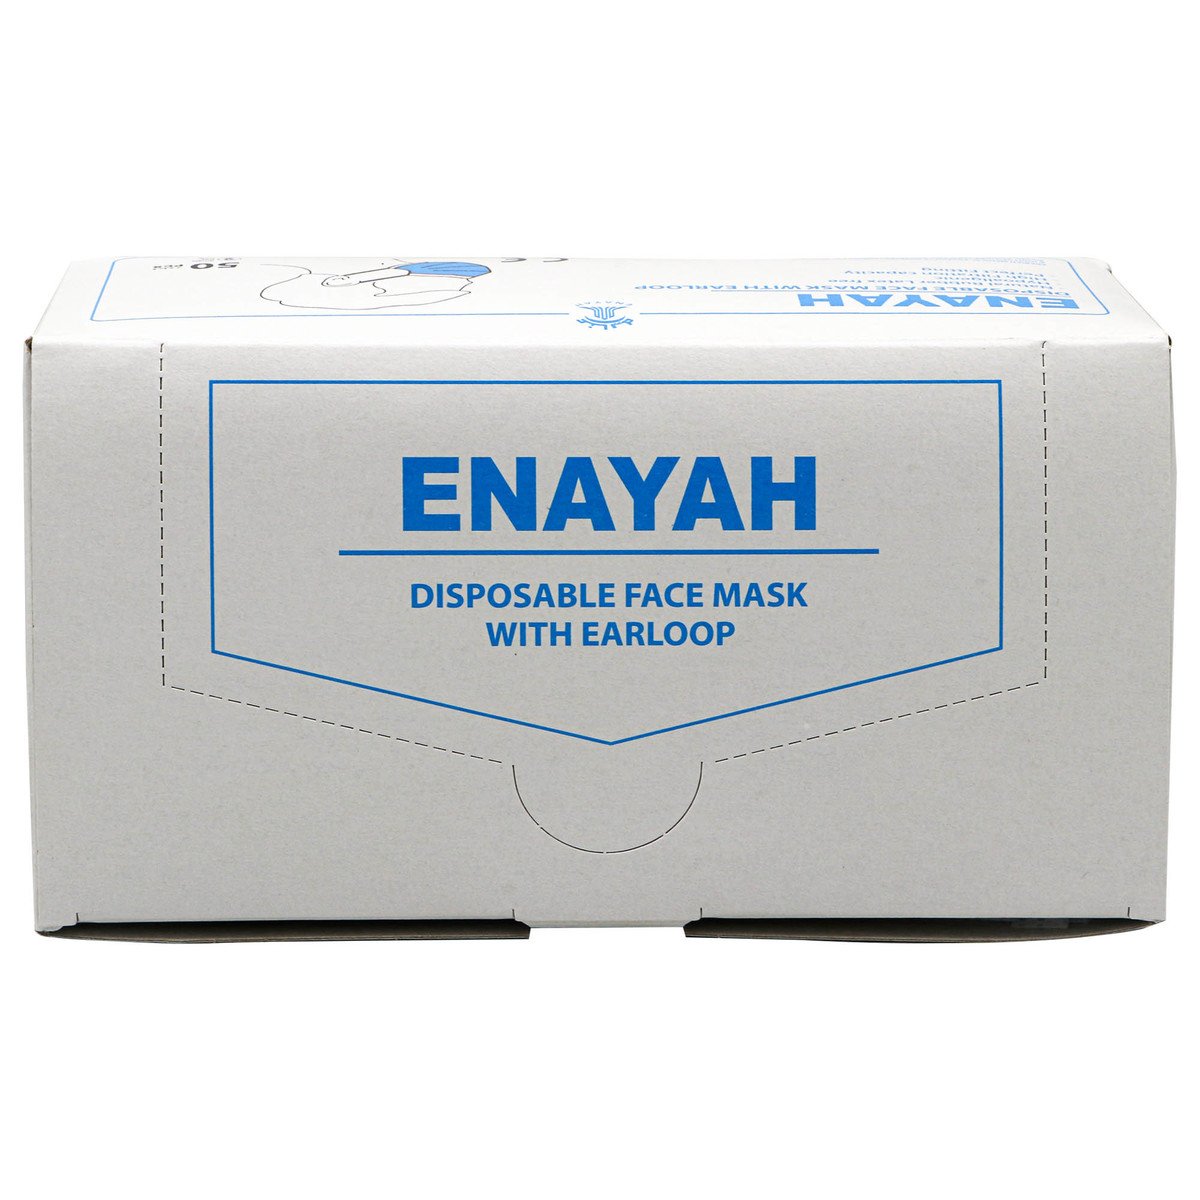 Enayah Disposable Face Mask With Earloop 50pcs